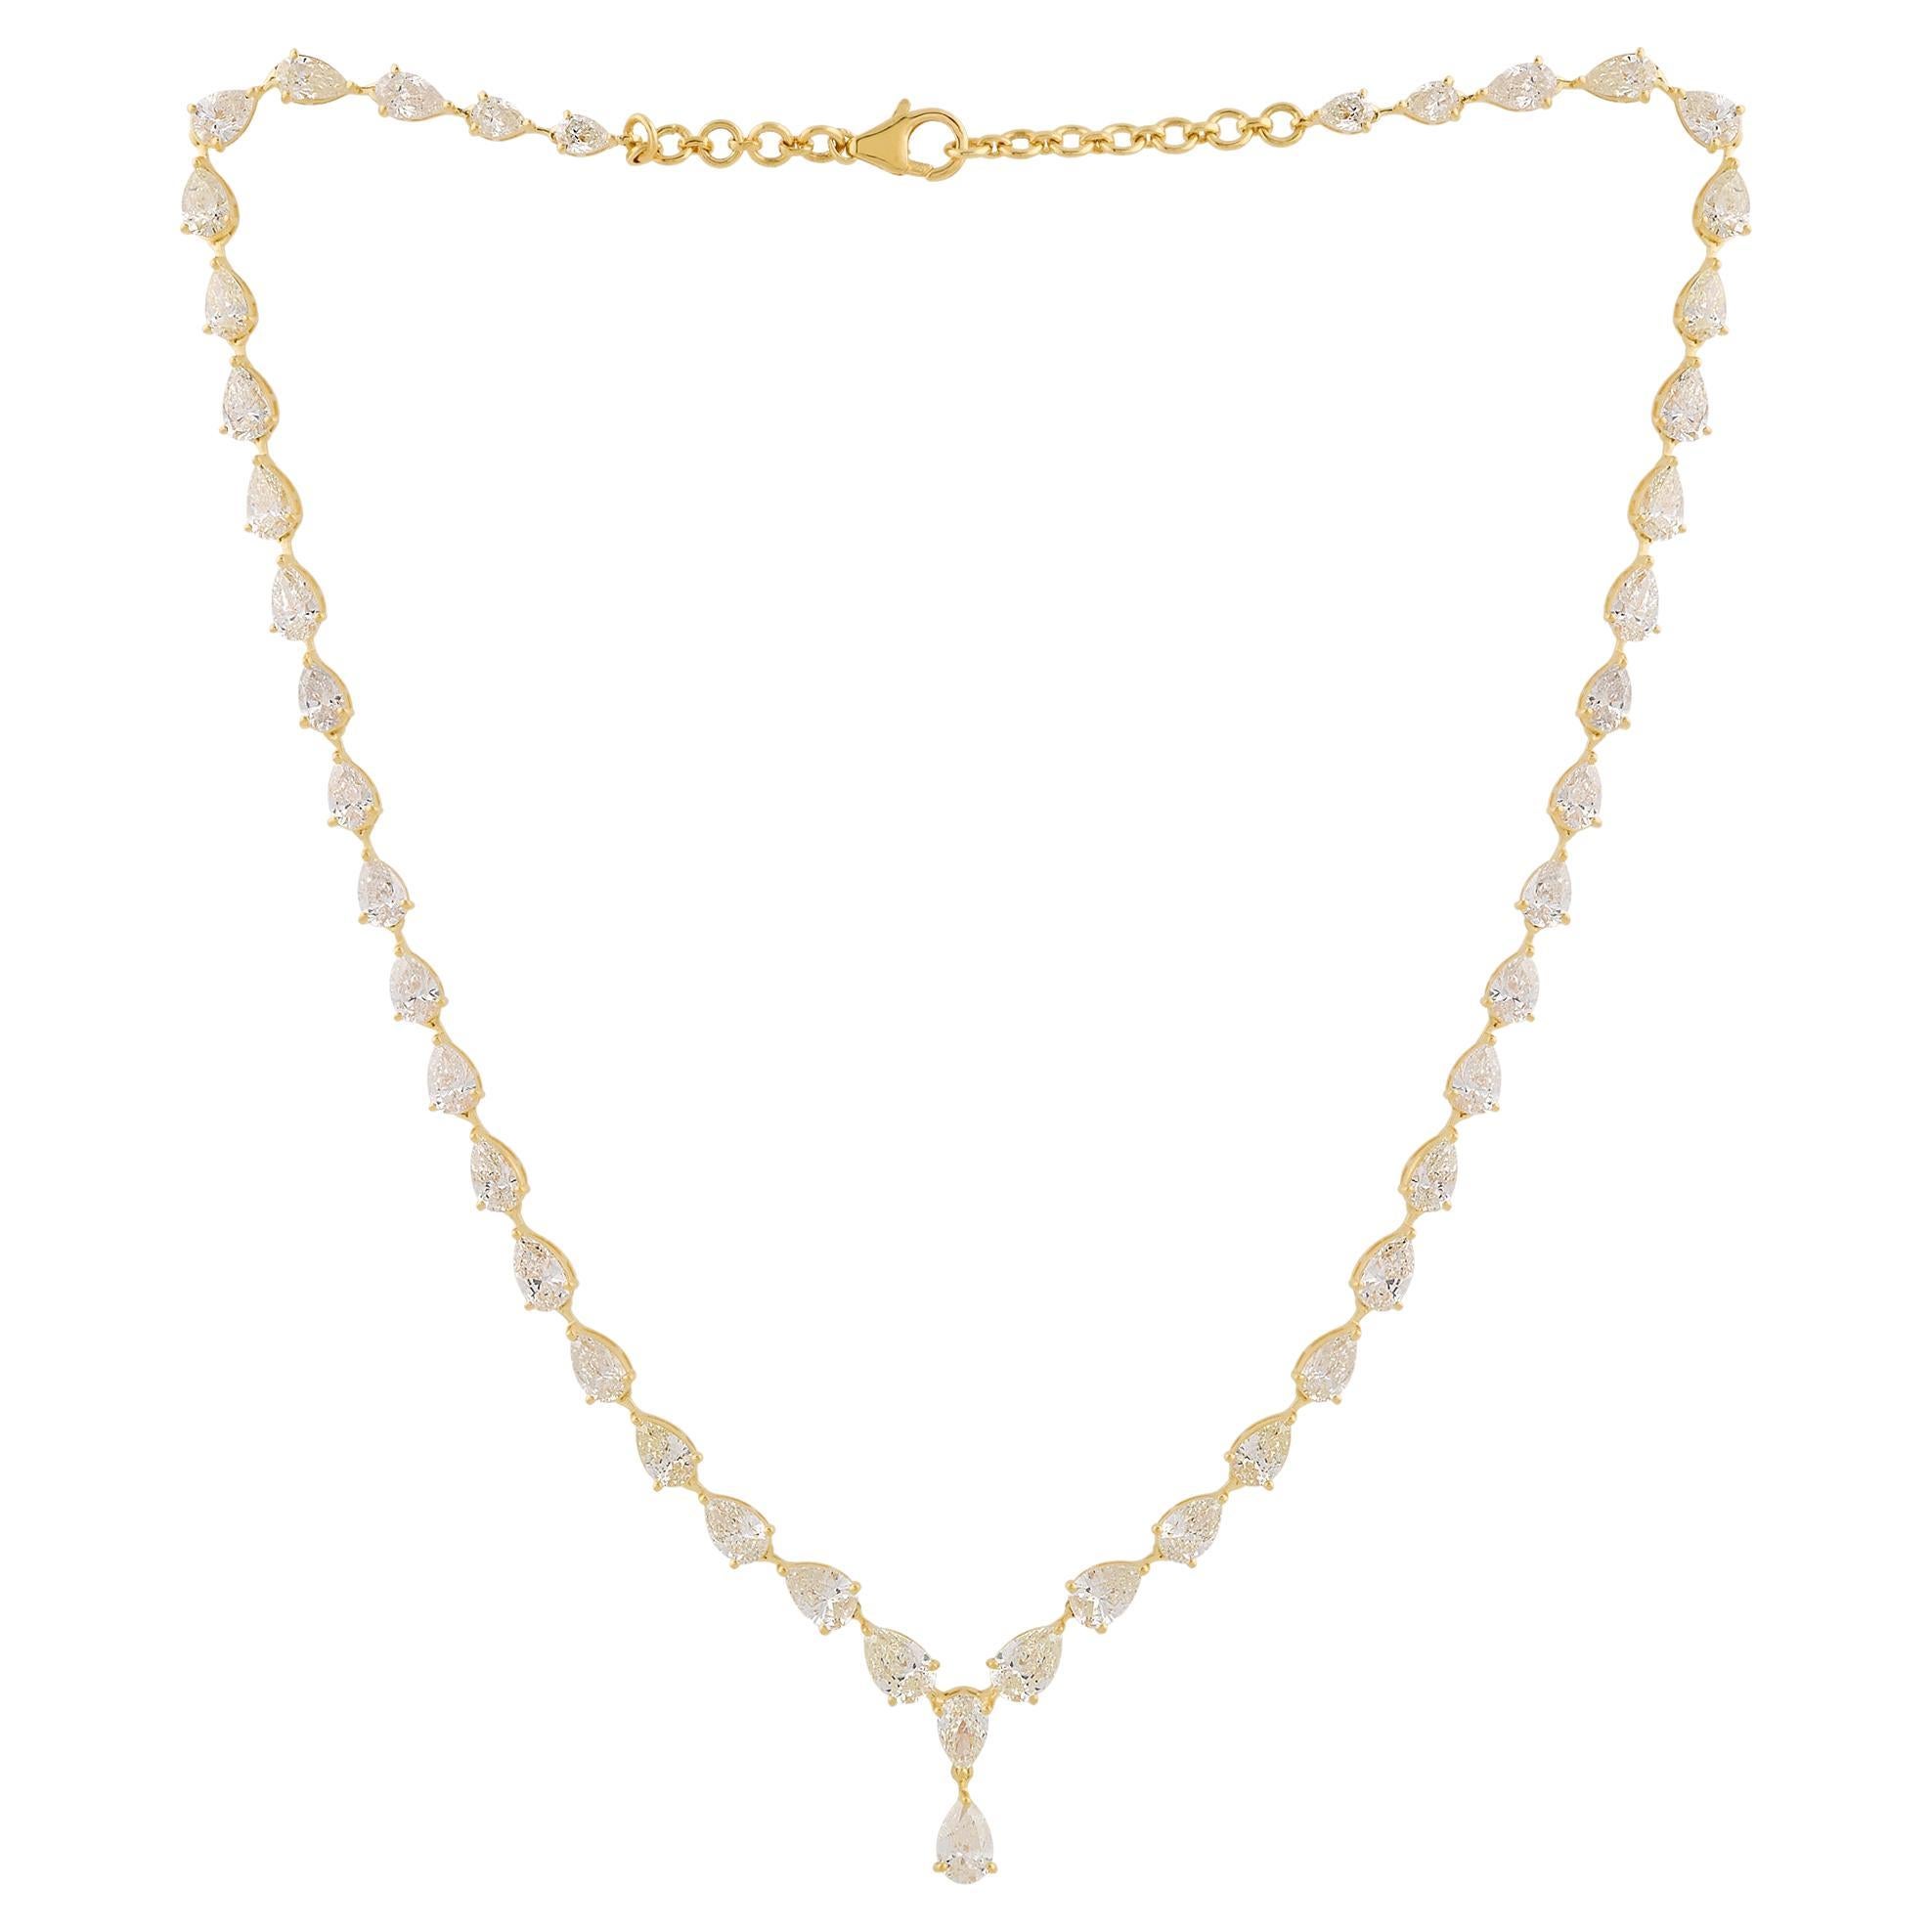 Real 17.65 Carat Pear Shape Diamond Necklace 18 Karat Yellow Gold Fine Jewelry For Sale